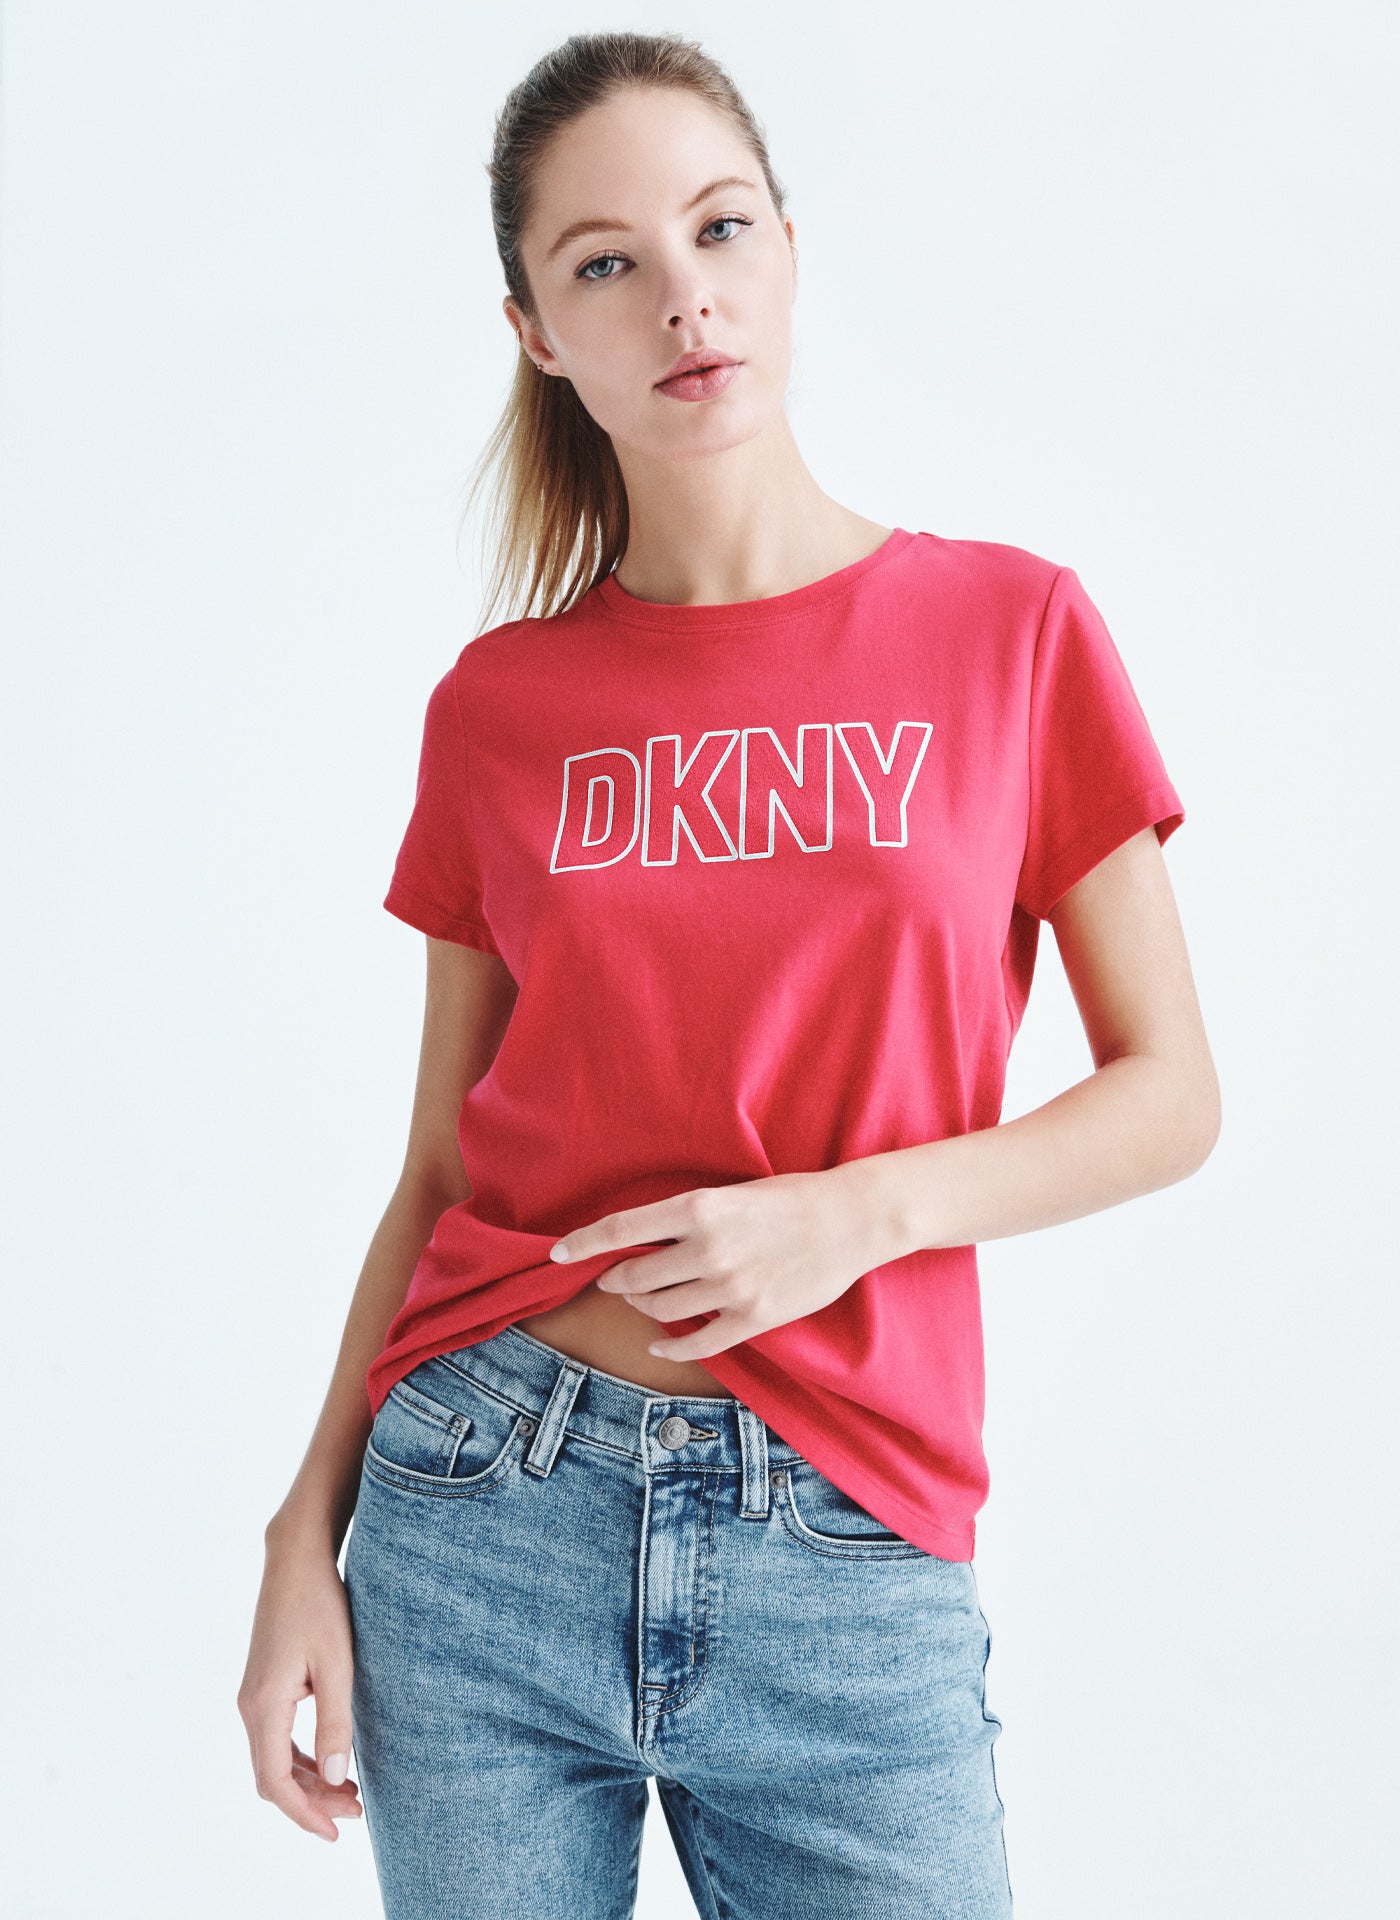 DKNY Glitter Logo T-Shirt - Macy's | Dkny, Tshirt logo, T shirts for women